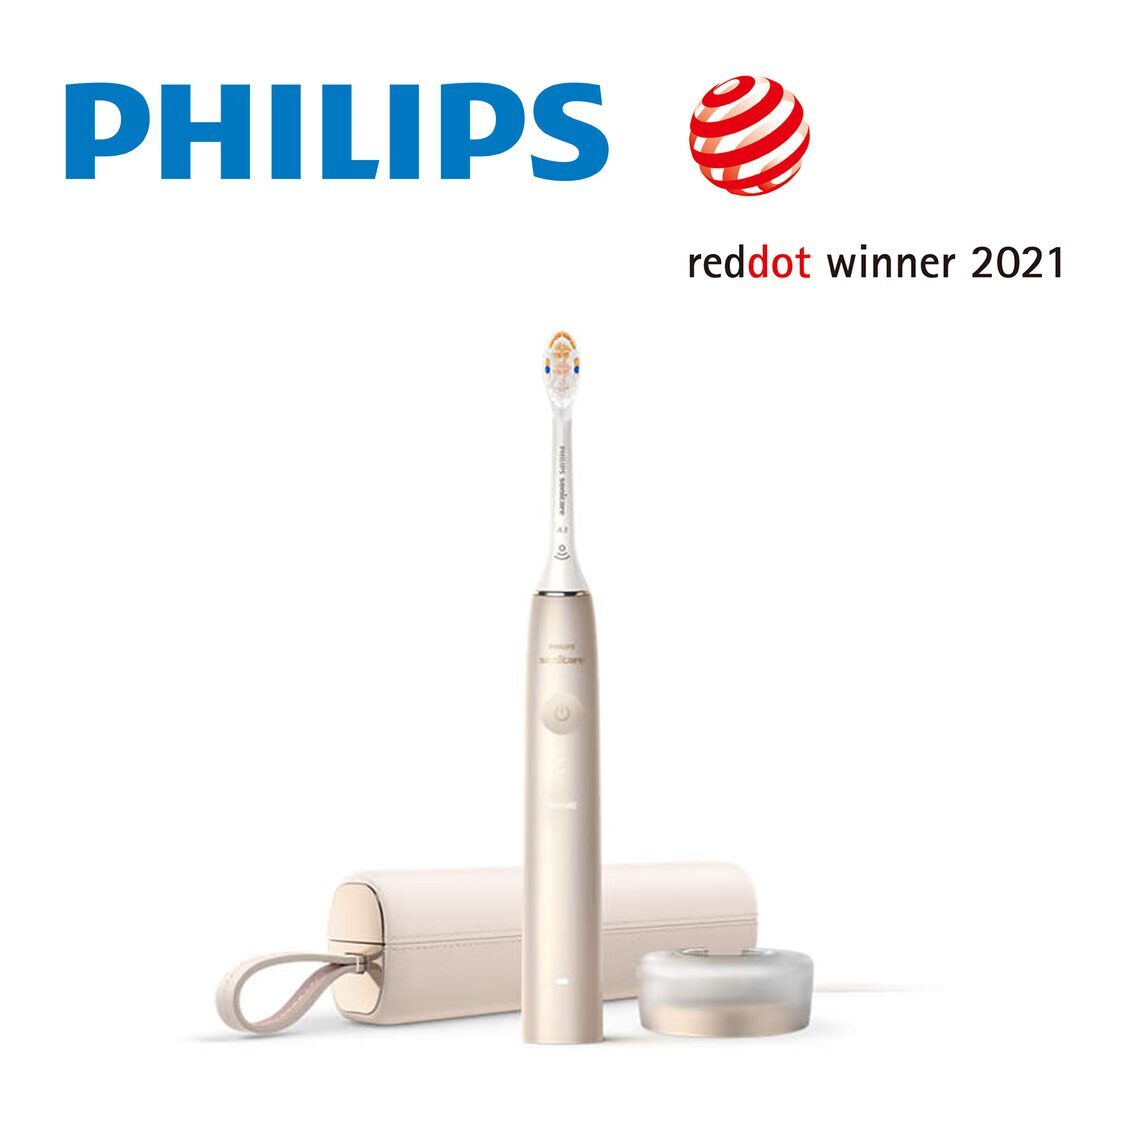 PHILIPS Sonicare 9900 Prestige Power Toothbrush with SenseIQ